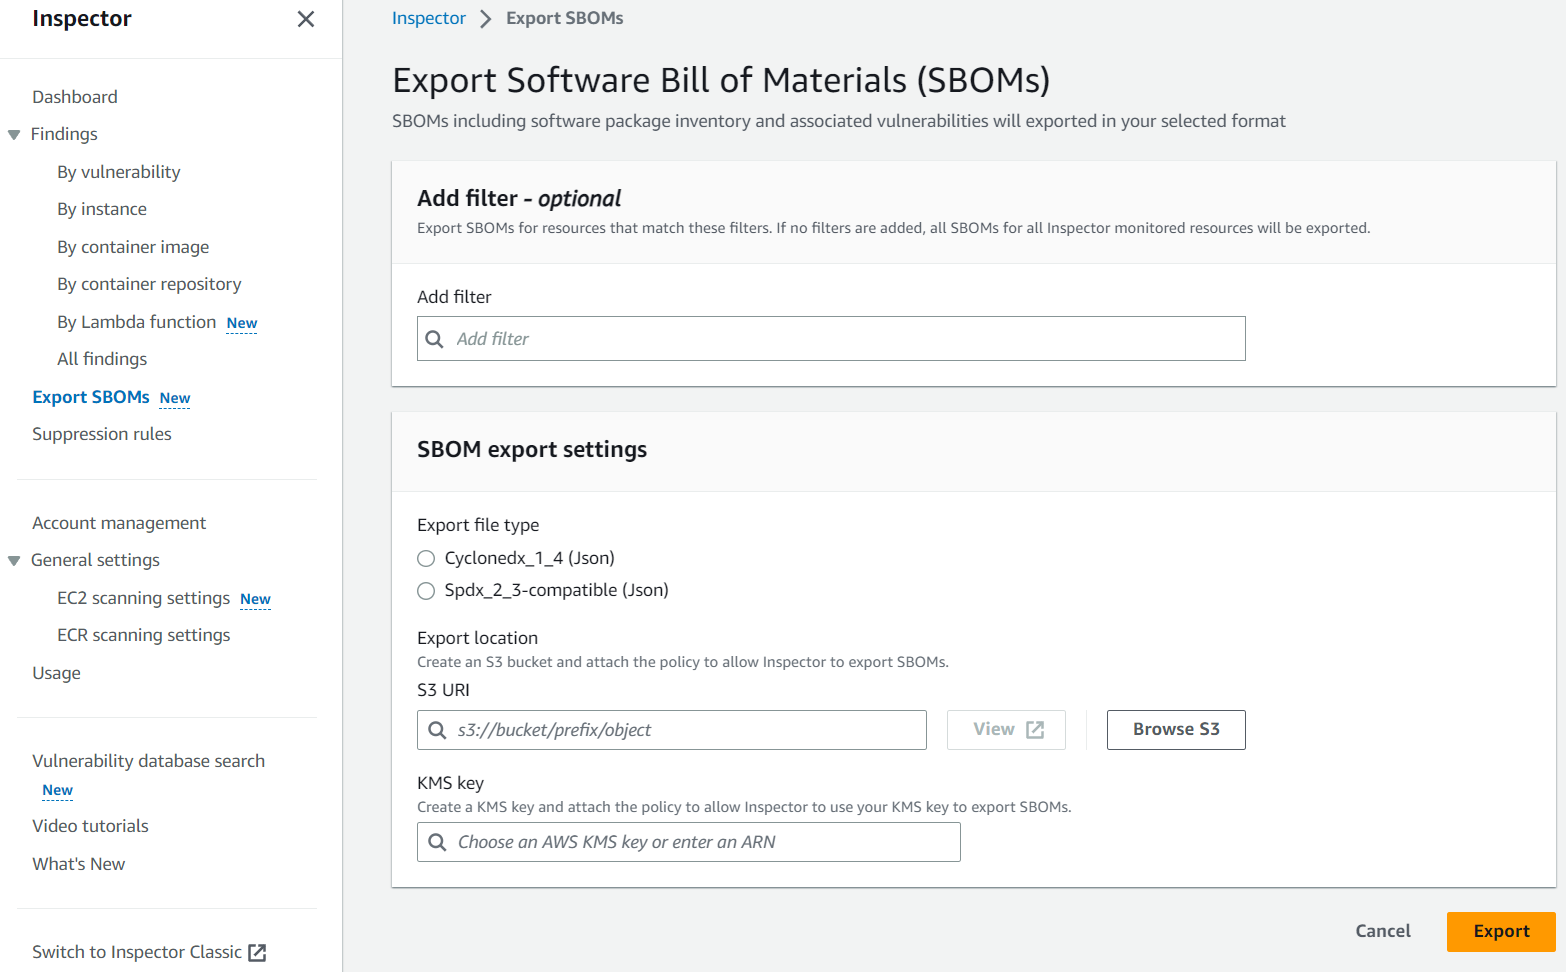 Export a Software Bill of Materials using Amazon Inspector